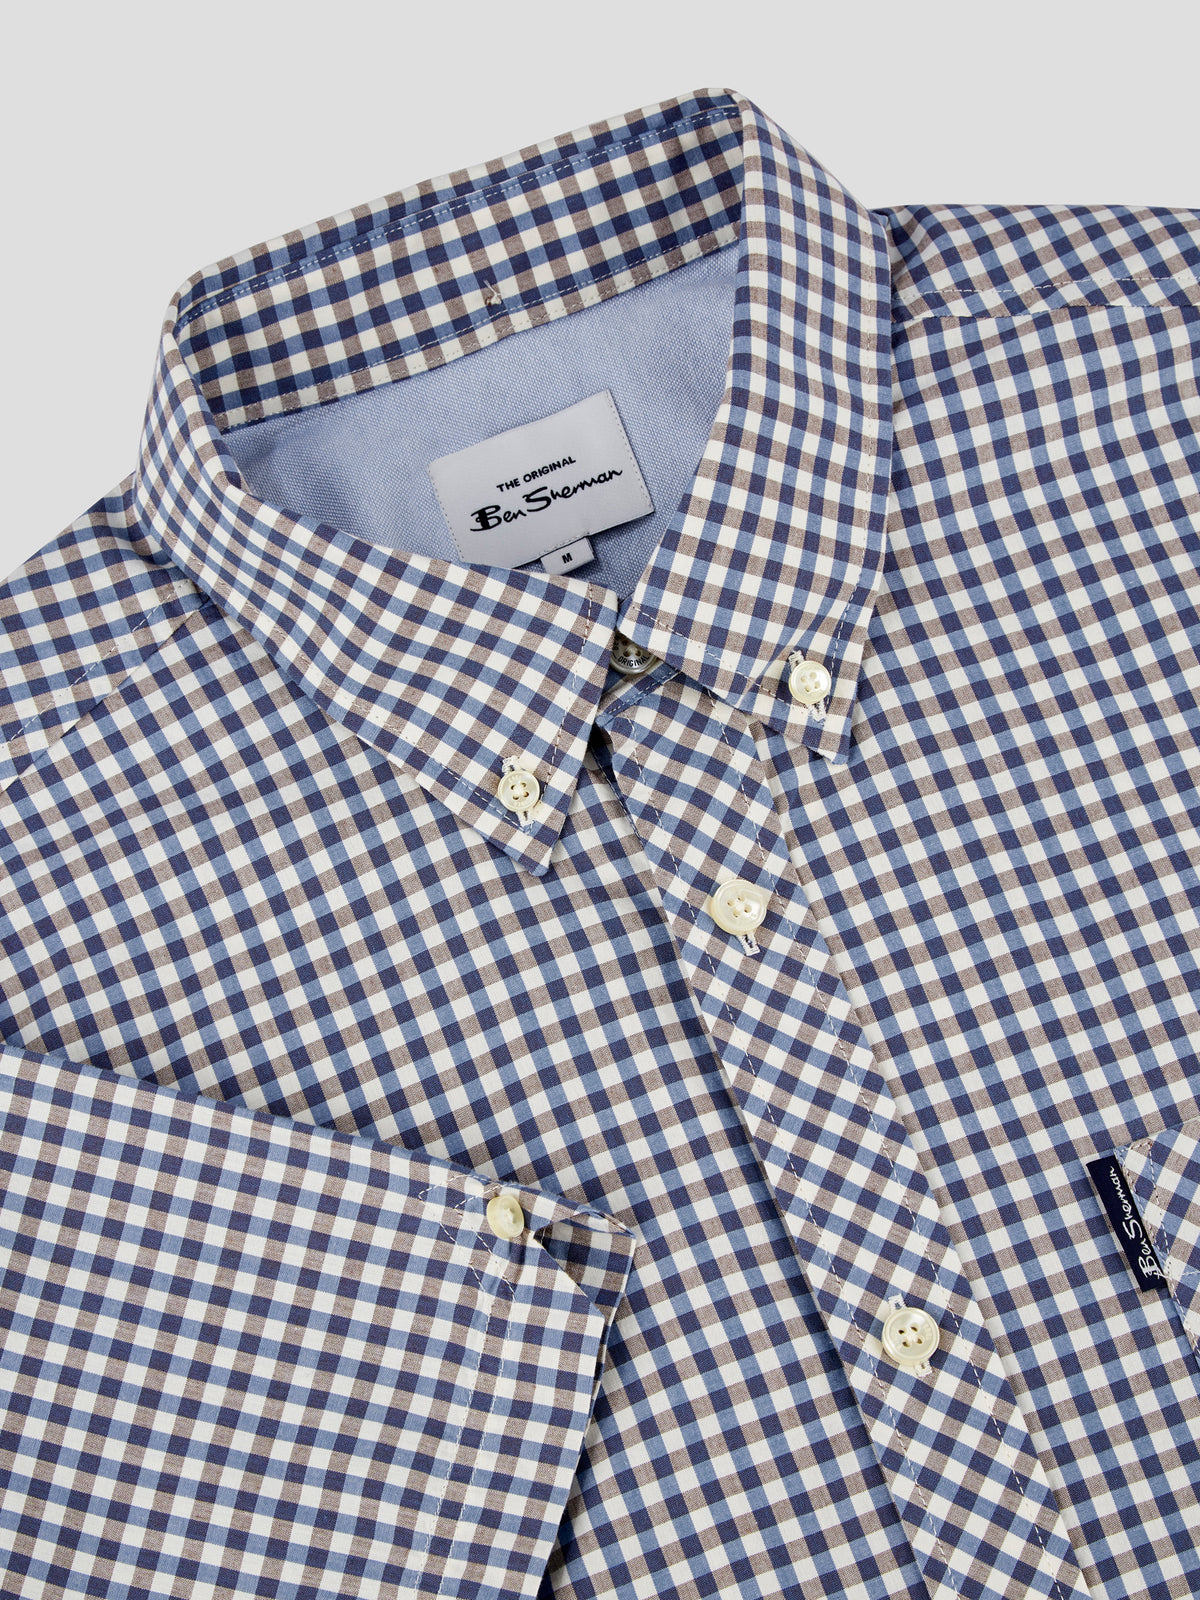 Ben Sherman Mens Signature Gingham Shirt - Short Sleeved, 05, 59142, Persian Blue